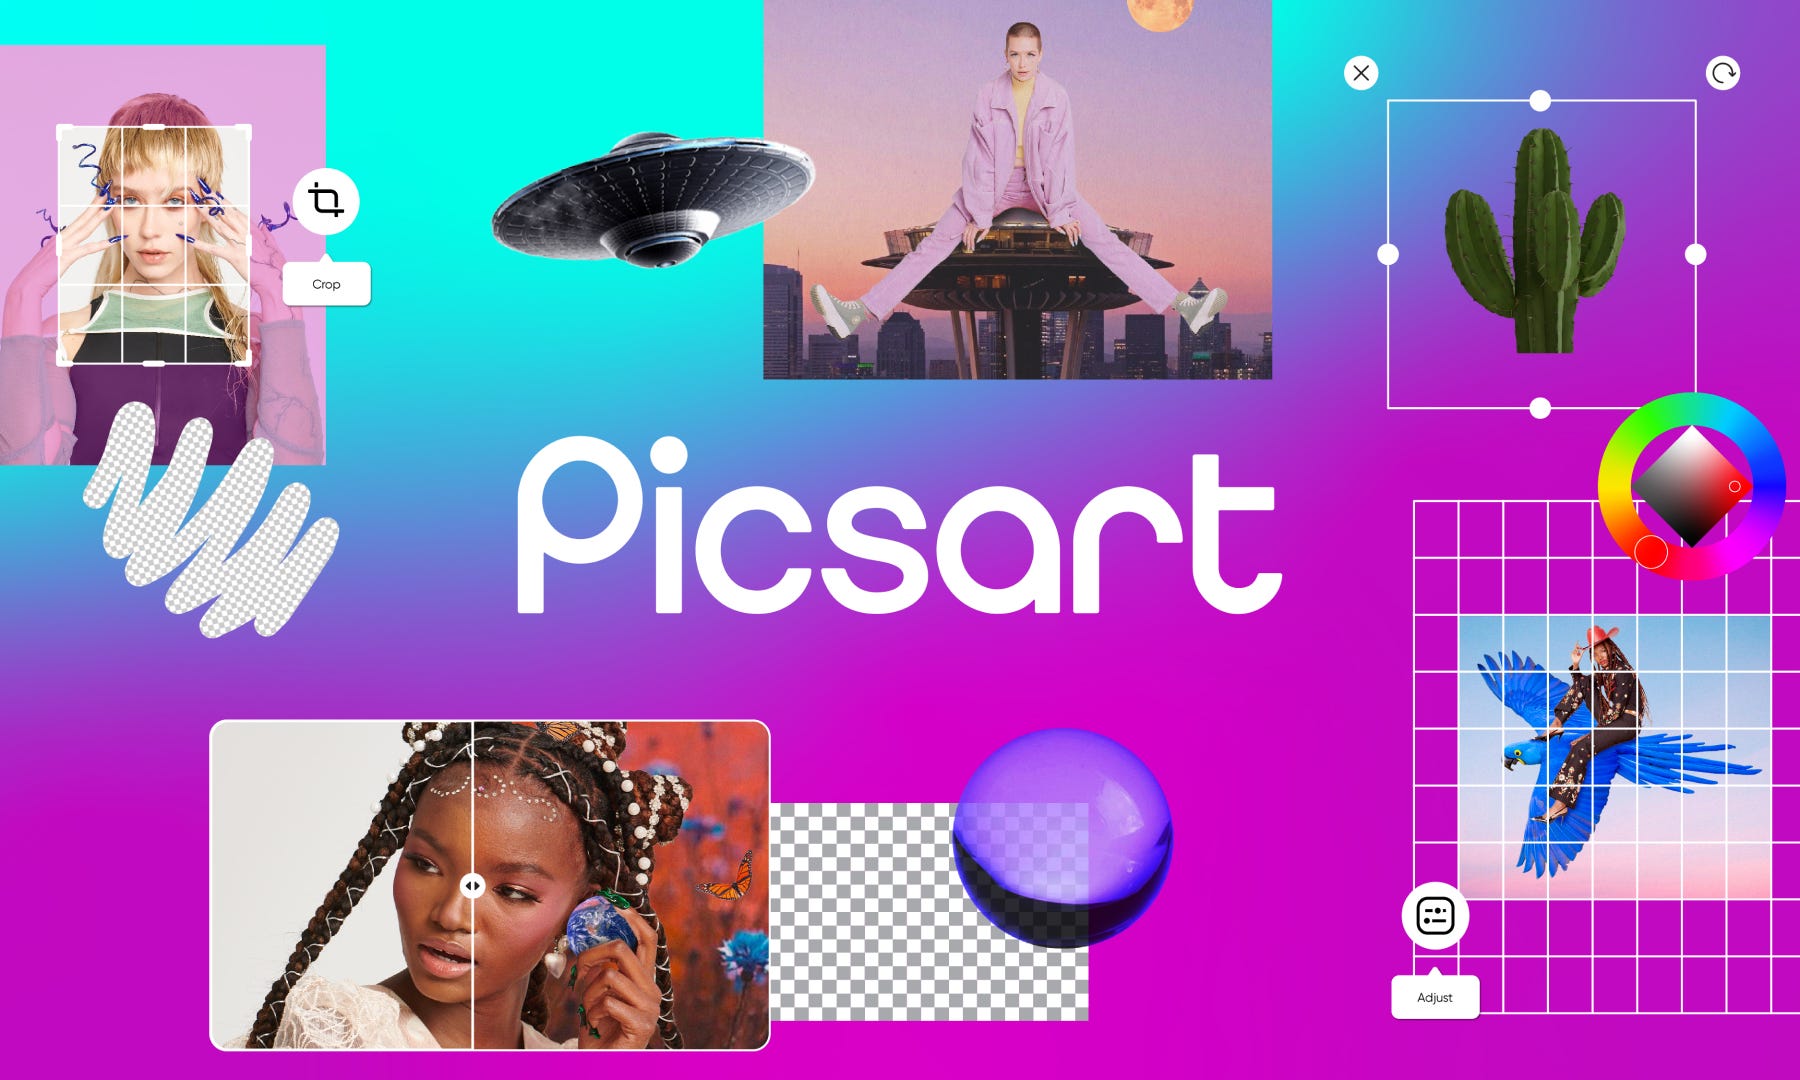 Animated GIF generator from Picsart makes AI fun again